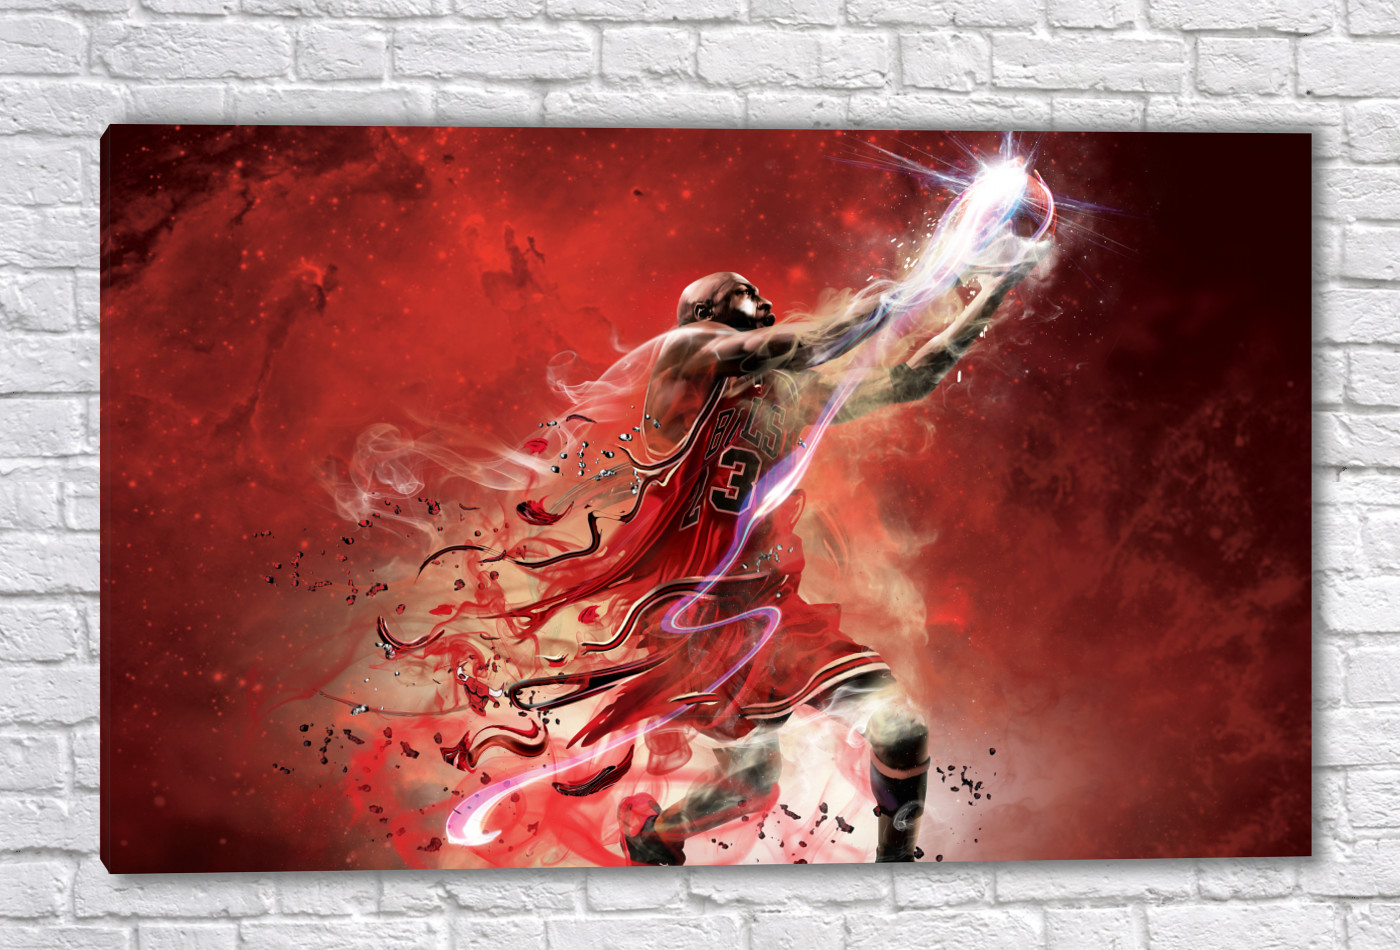 Sport Art & Photo Prints Decor Basketball player In Red Smoke Art. No: 10000014607